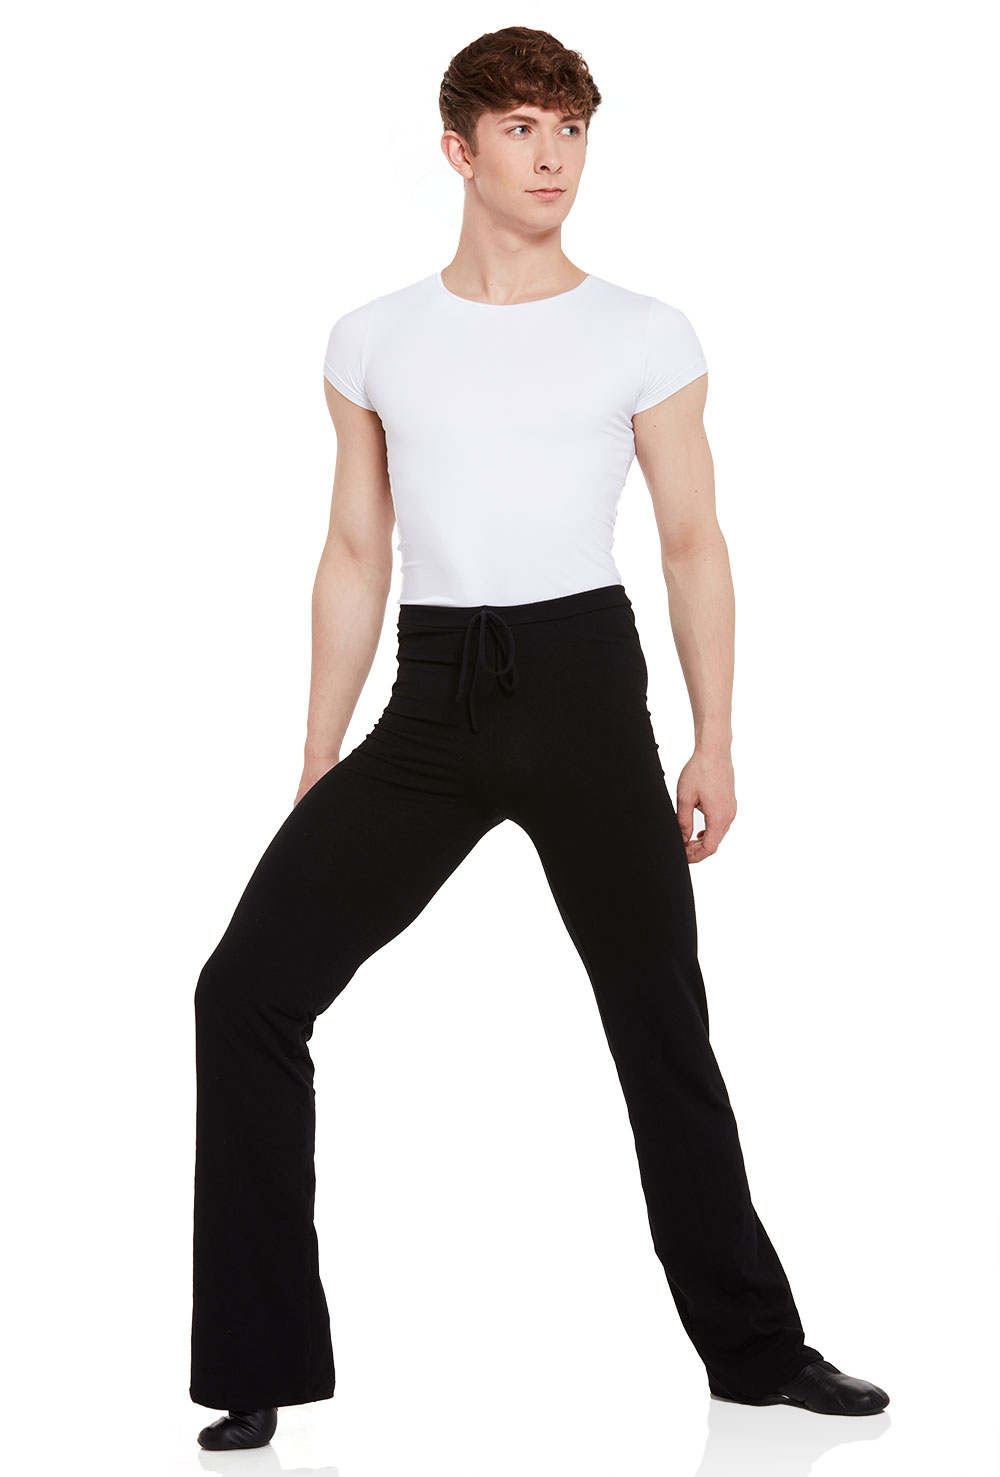 renvena Mens Black Straight Long Pants Professional Latin Ballroom Tango  Modern Dance Trousers Black 29